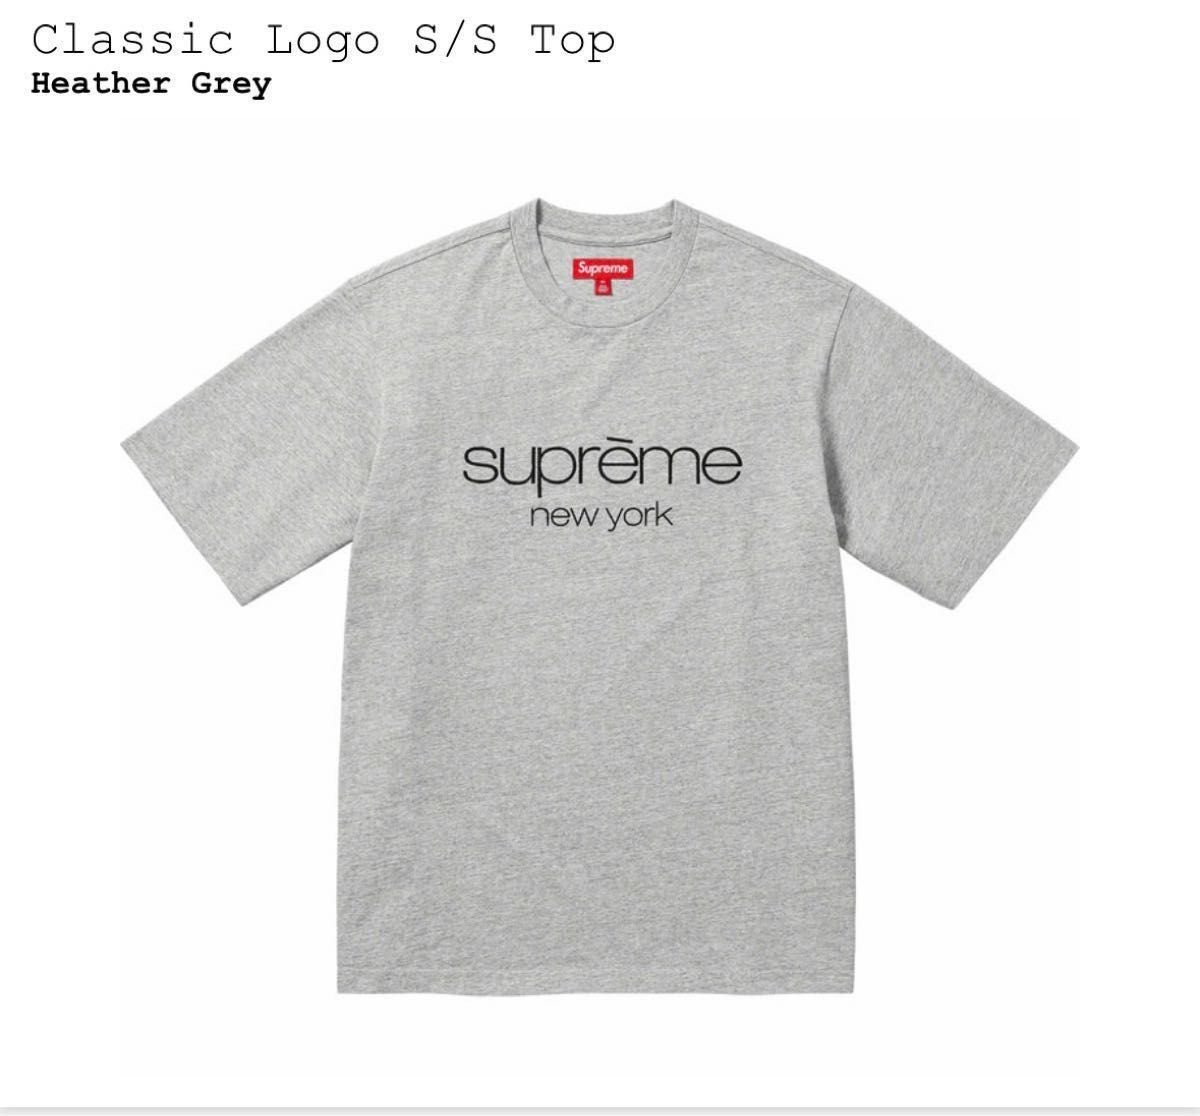 【SUPREME】Classic Logo S/S Top Lサイズ 未使用品/グレー/トレマインエモリー/完売/シュプリーム